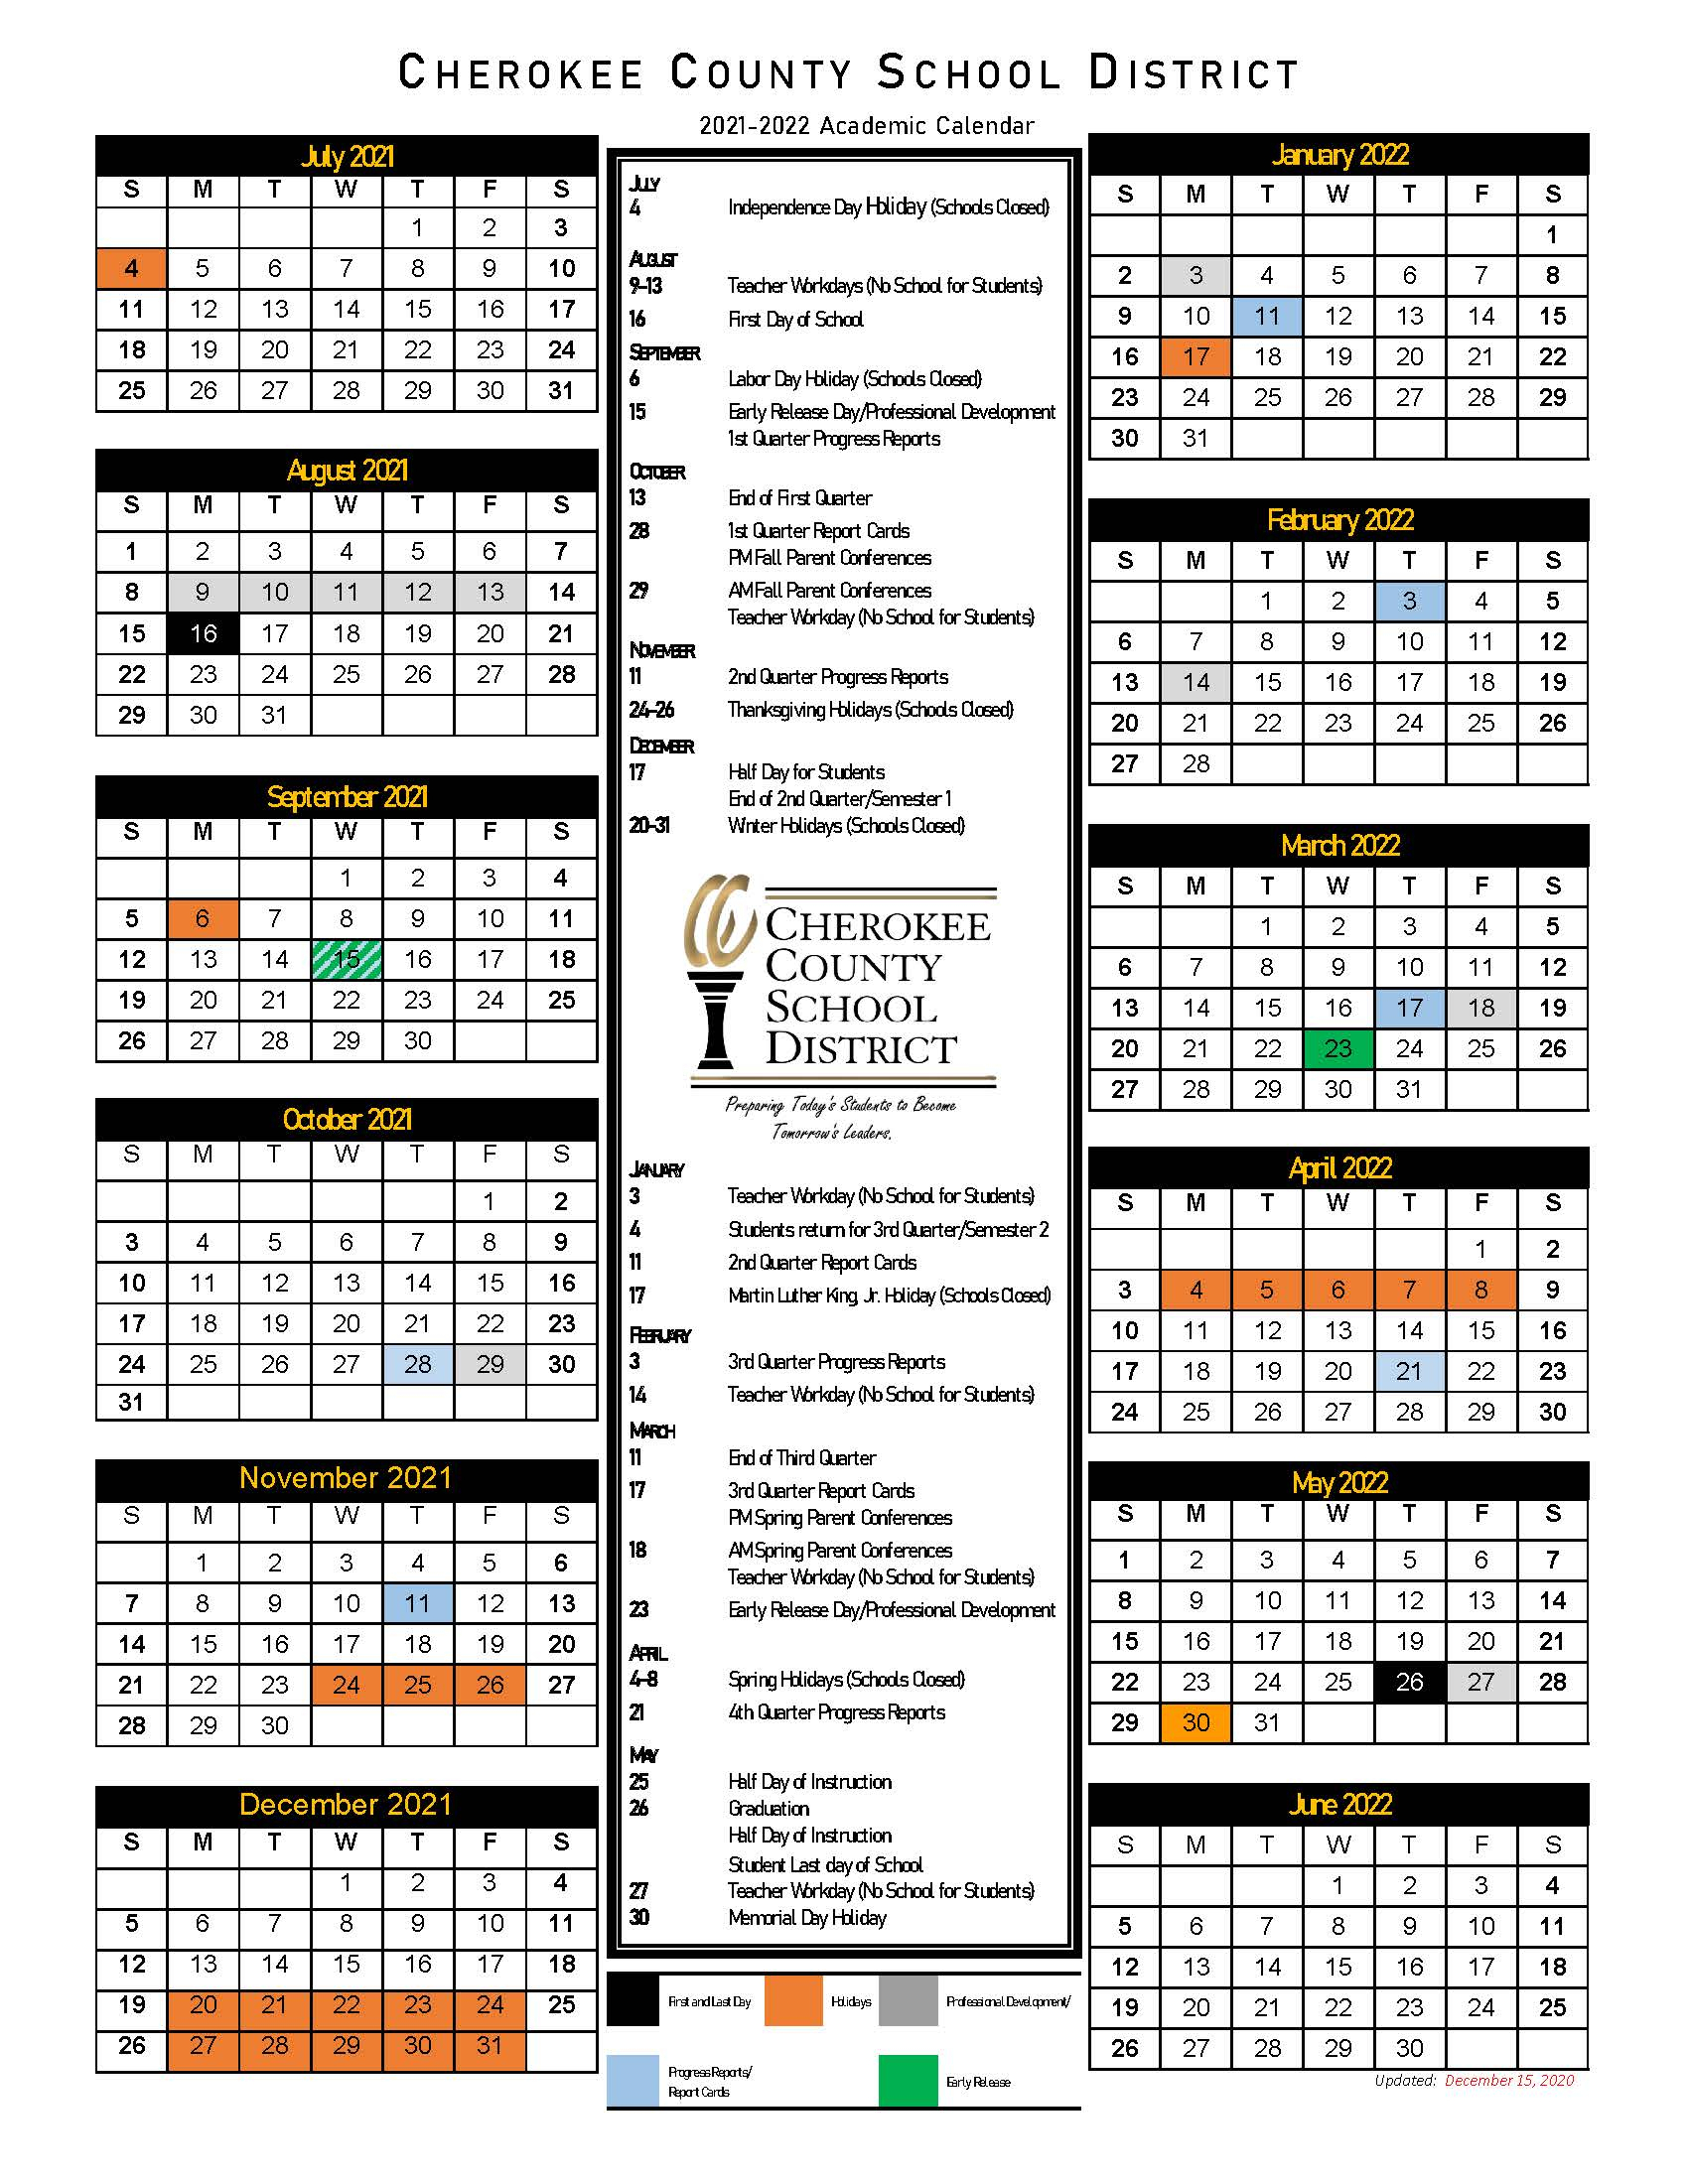 2021-2022 District Academic Calendar - Cherokee County